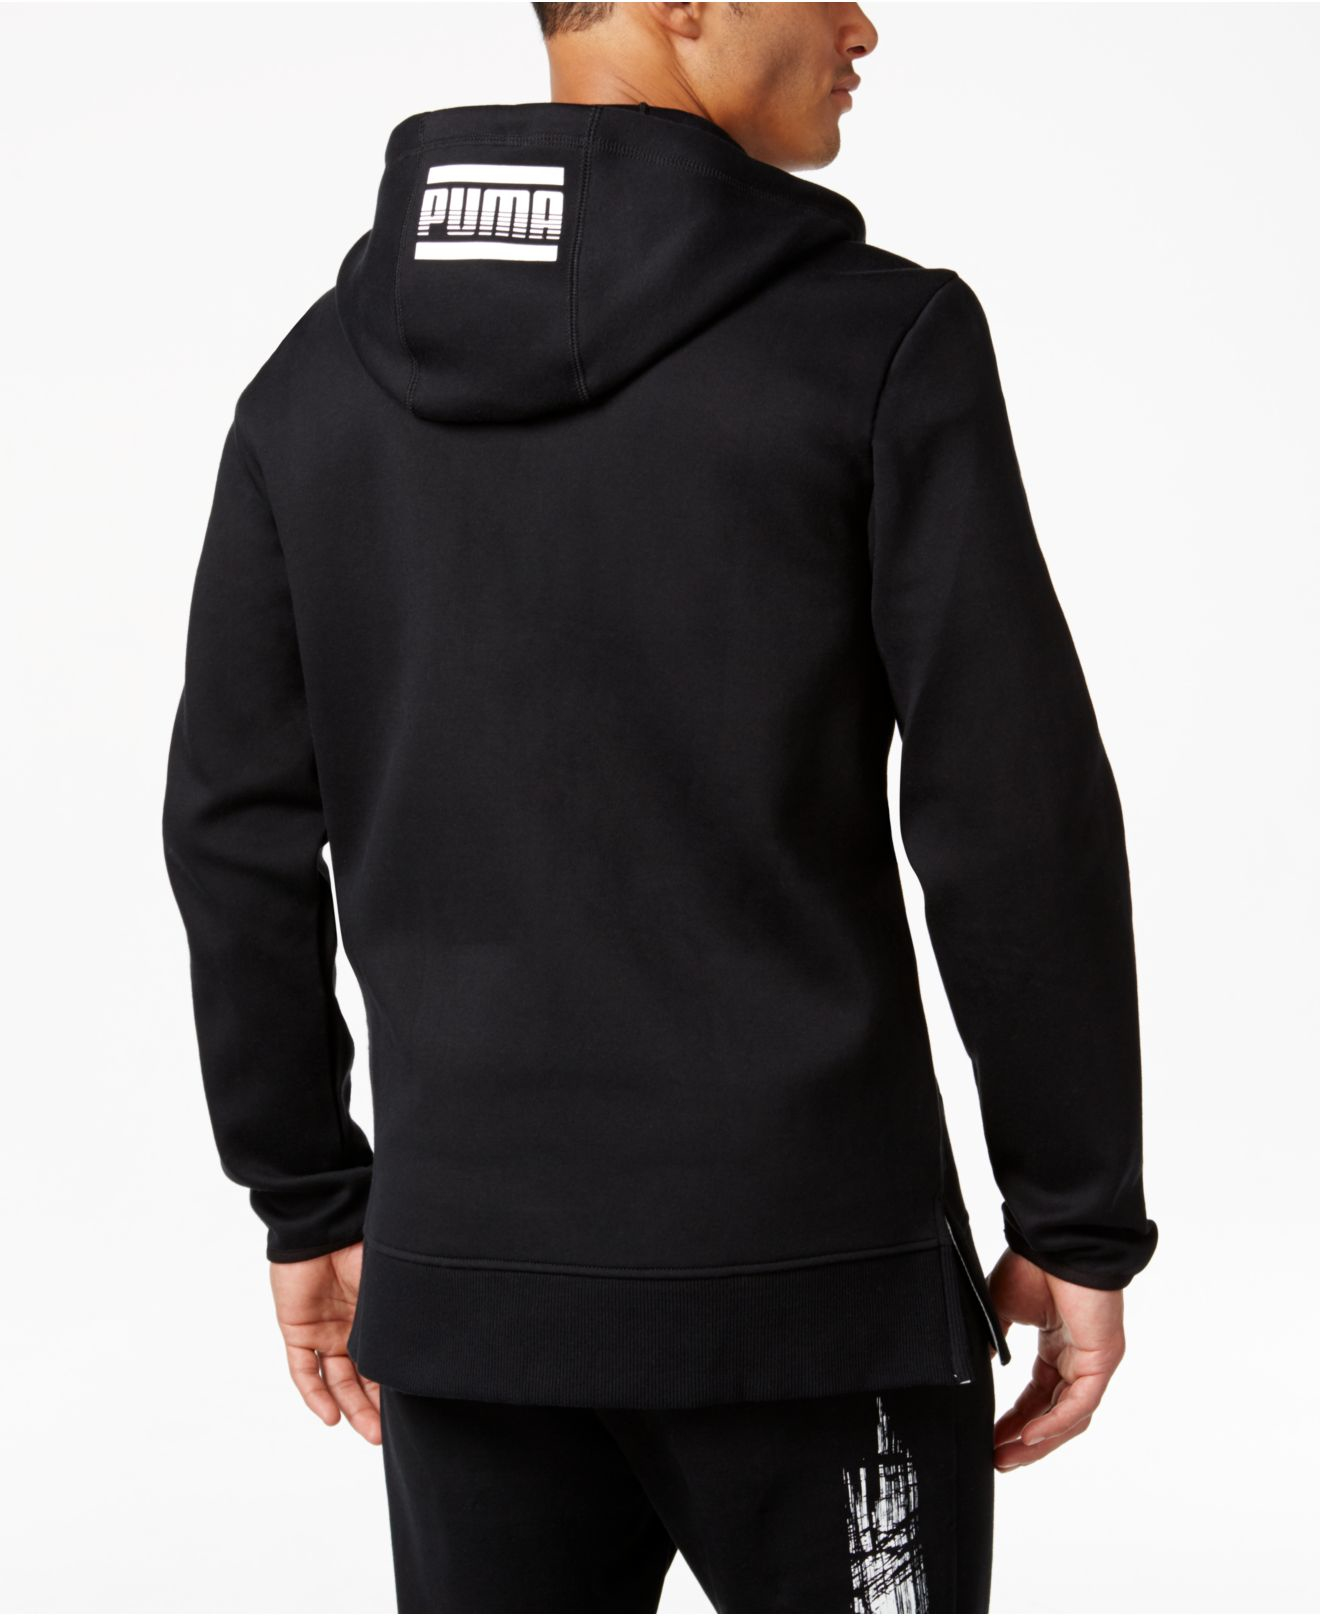 PUMA Cotton Men's Full-zip Hoodie in Black for Men - Lyst